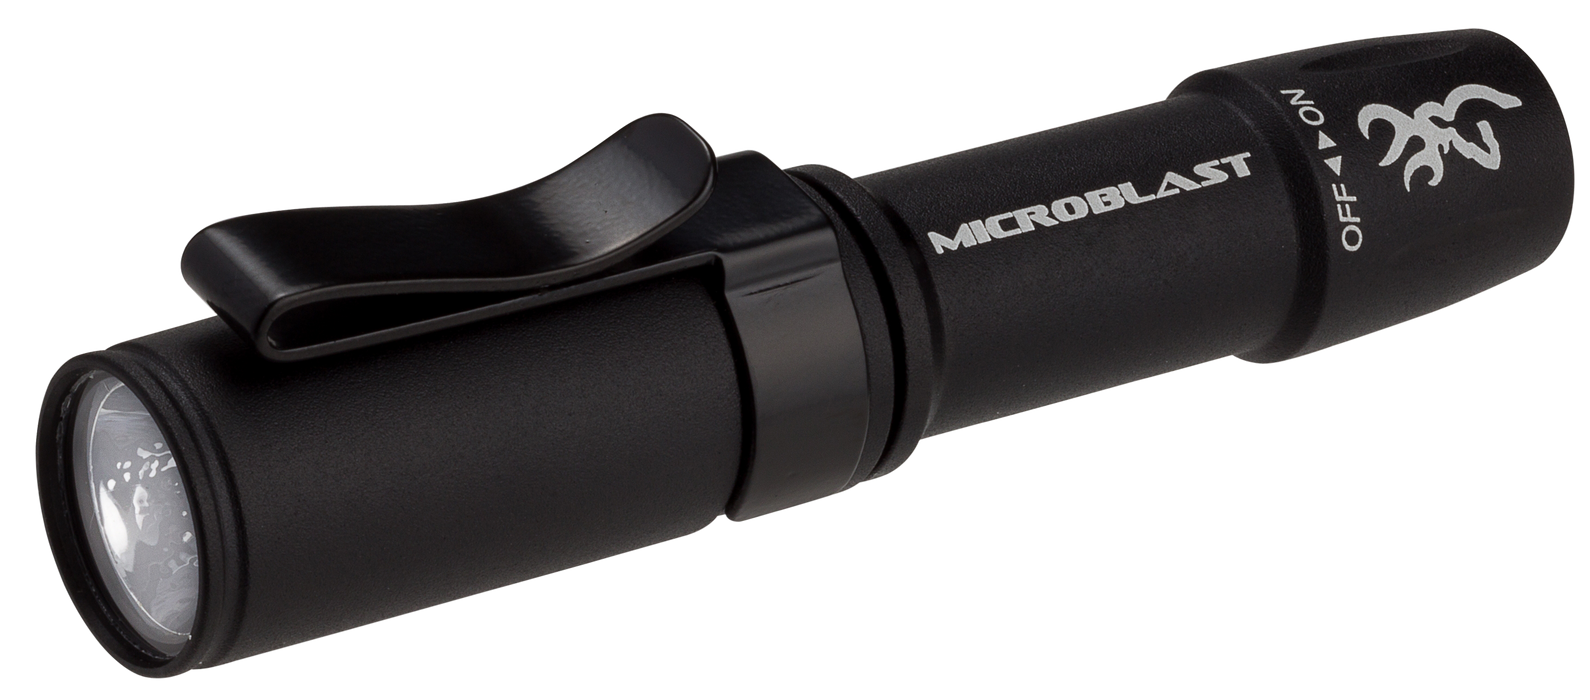 Browning Microblast, Brn 3712114  Microbalst Aaa Flashlight       Blk